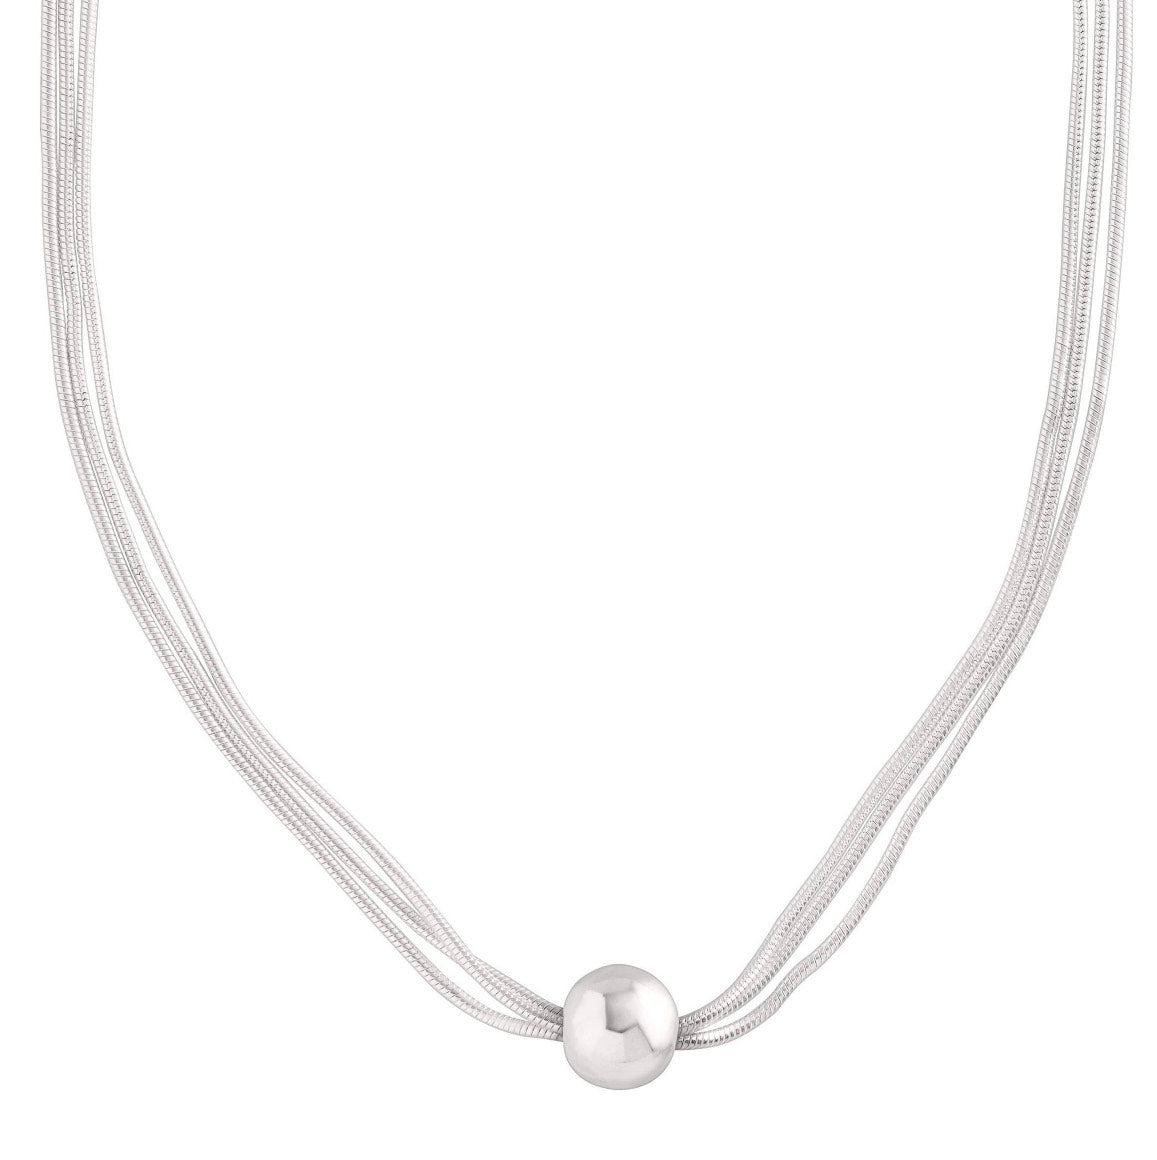 Silpada 'Thoreau' Multi-Strand Bead Necklace in Sterling Silver, 16"